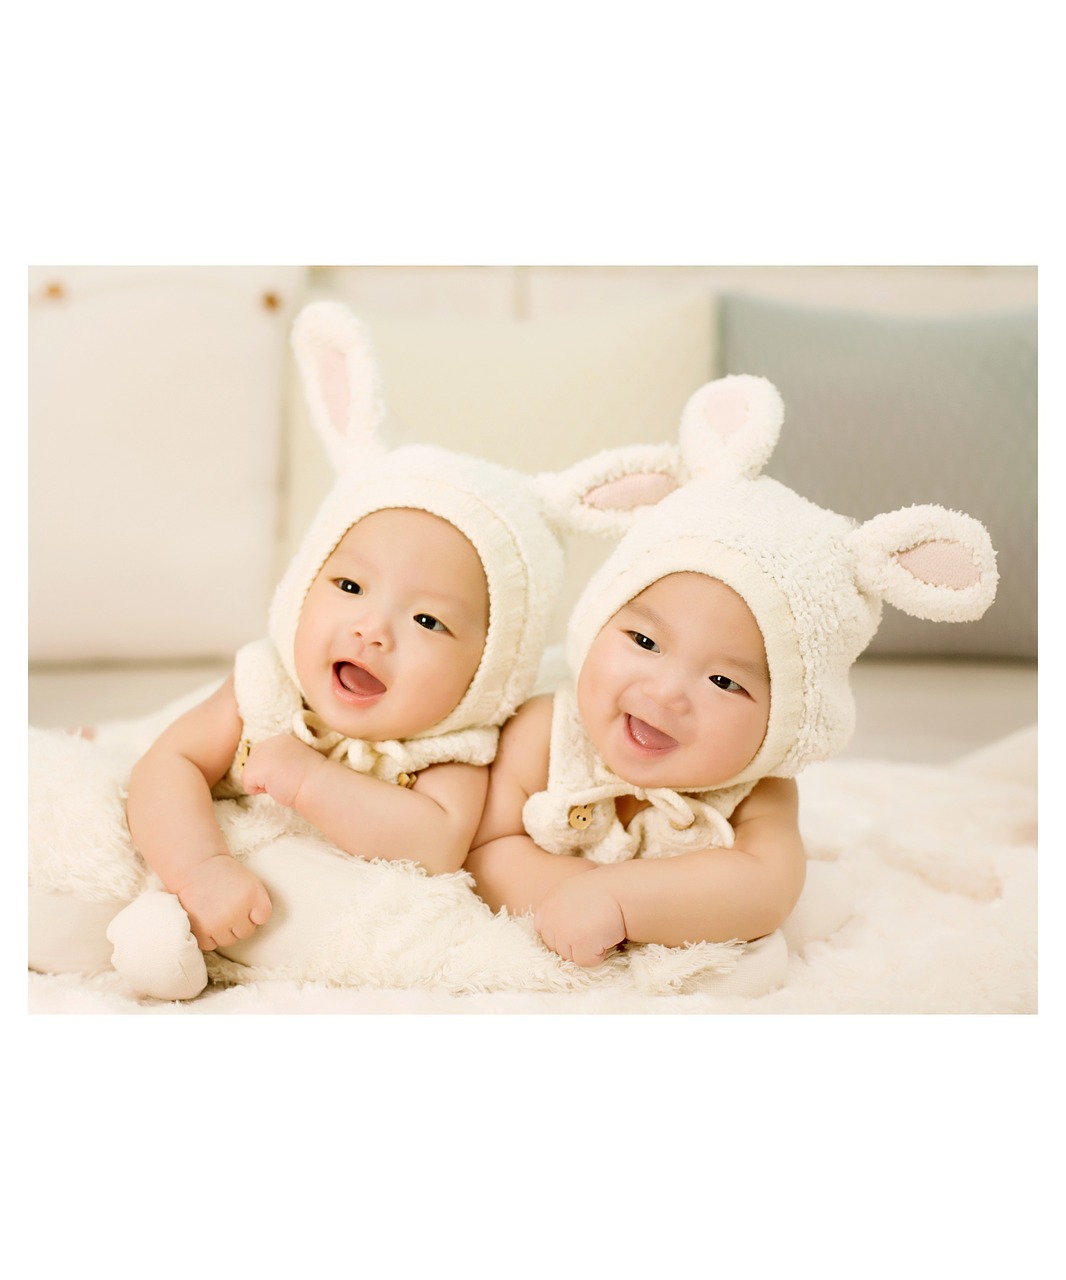 Image - baby twins 100 days photo